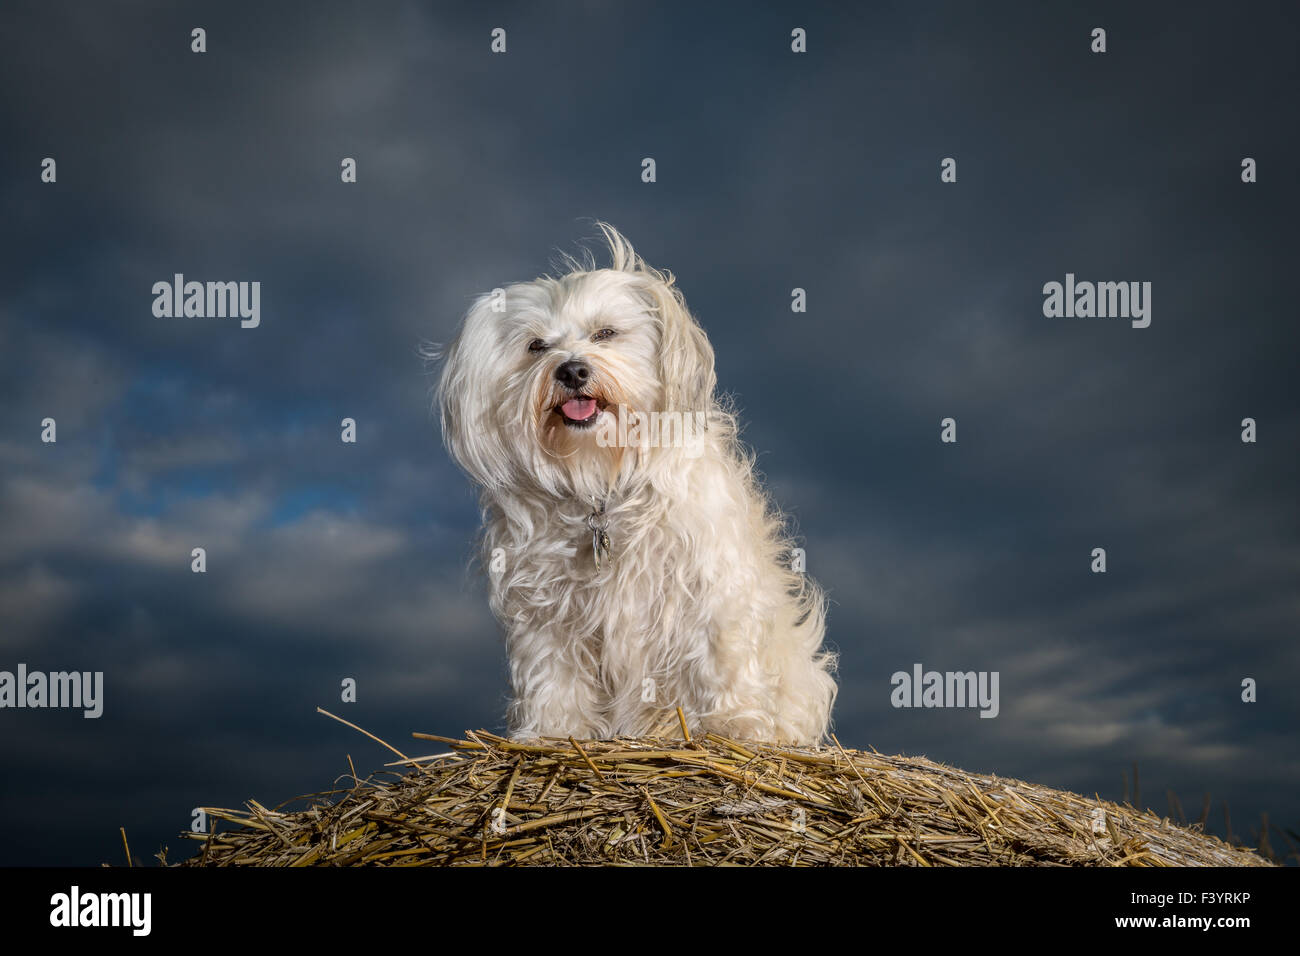 Dog on a straw bale Stock Photo